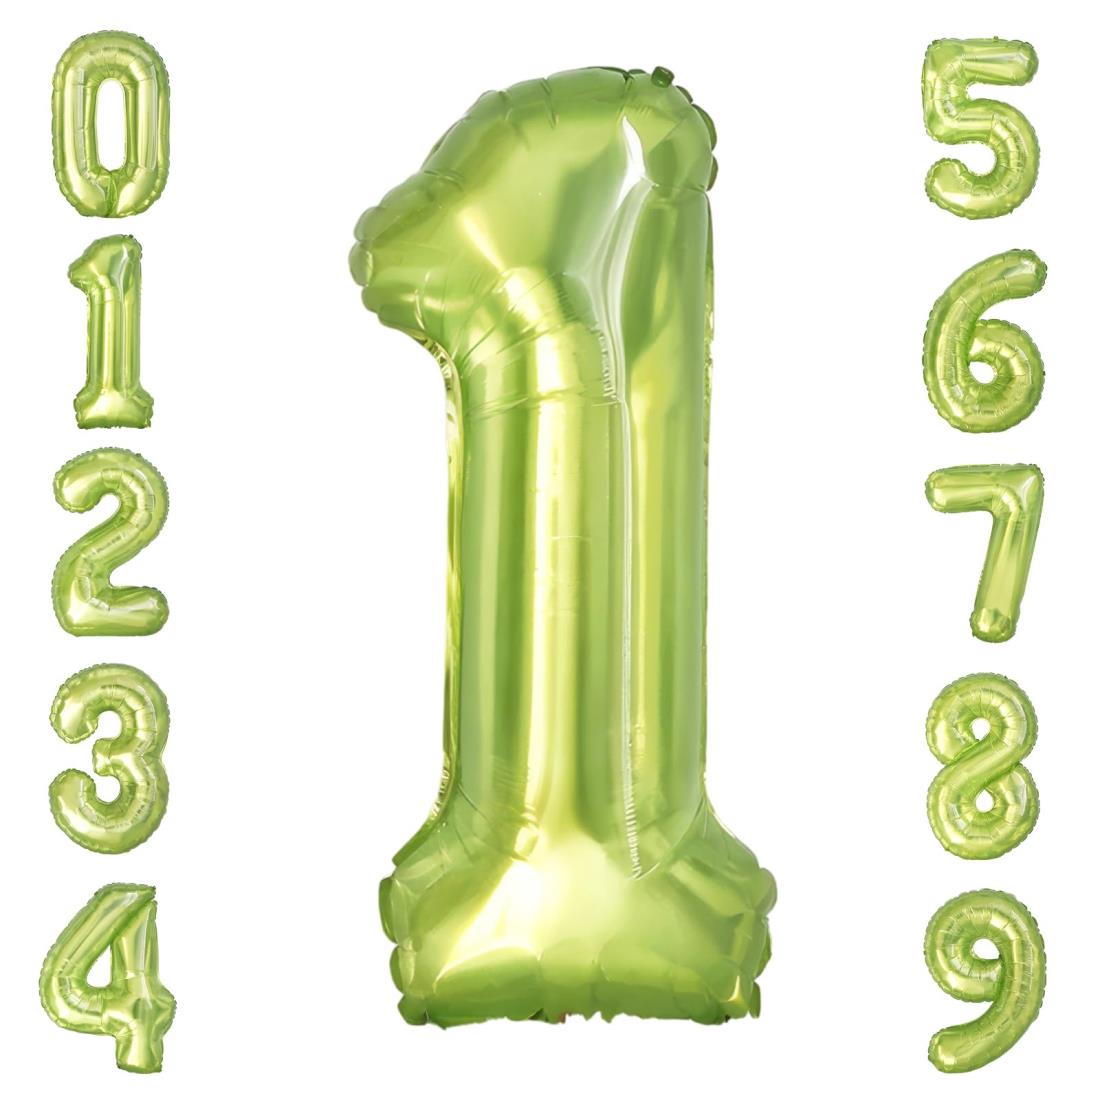 GRESATEK バルーン 数字 風船 誕生日 緑色 40インチ 大きい ナンバー1 バースデーバルーン 飾り付け 結婚式 パーティー 記念日 ウェディング クリスタル ゼリー クリスタル グリーン 1